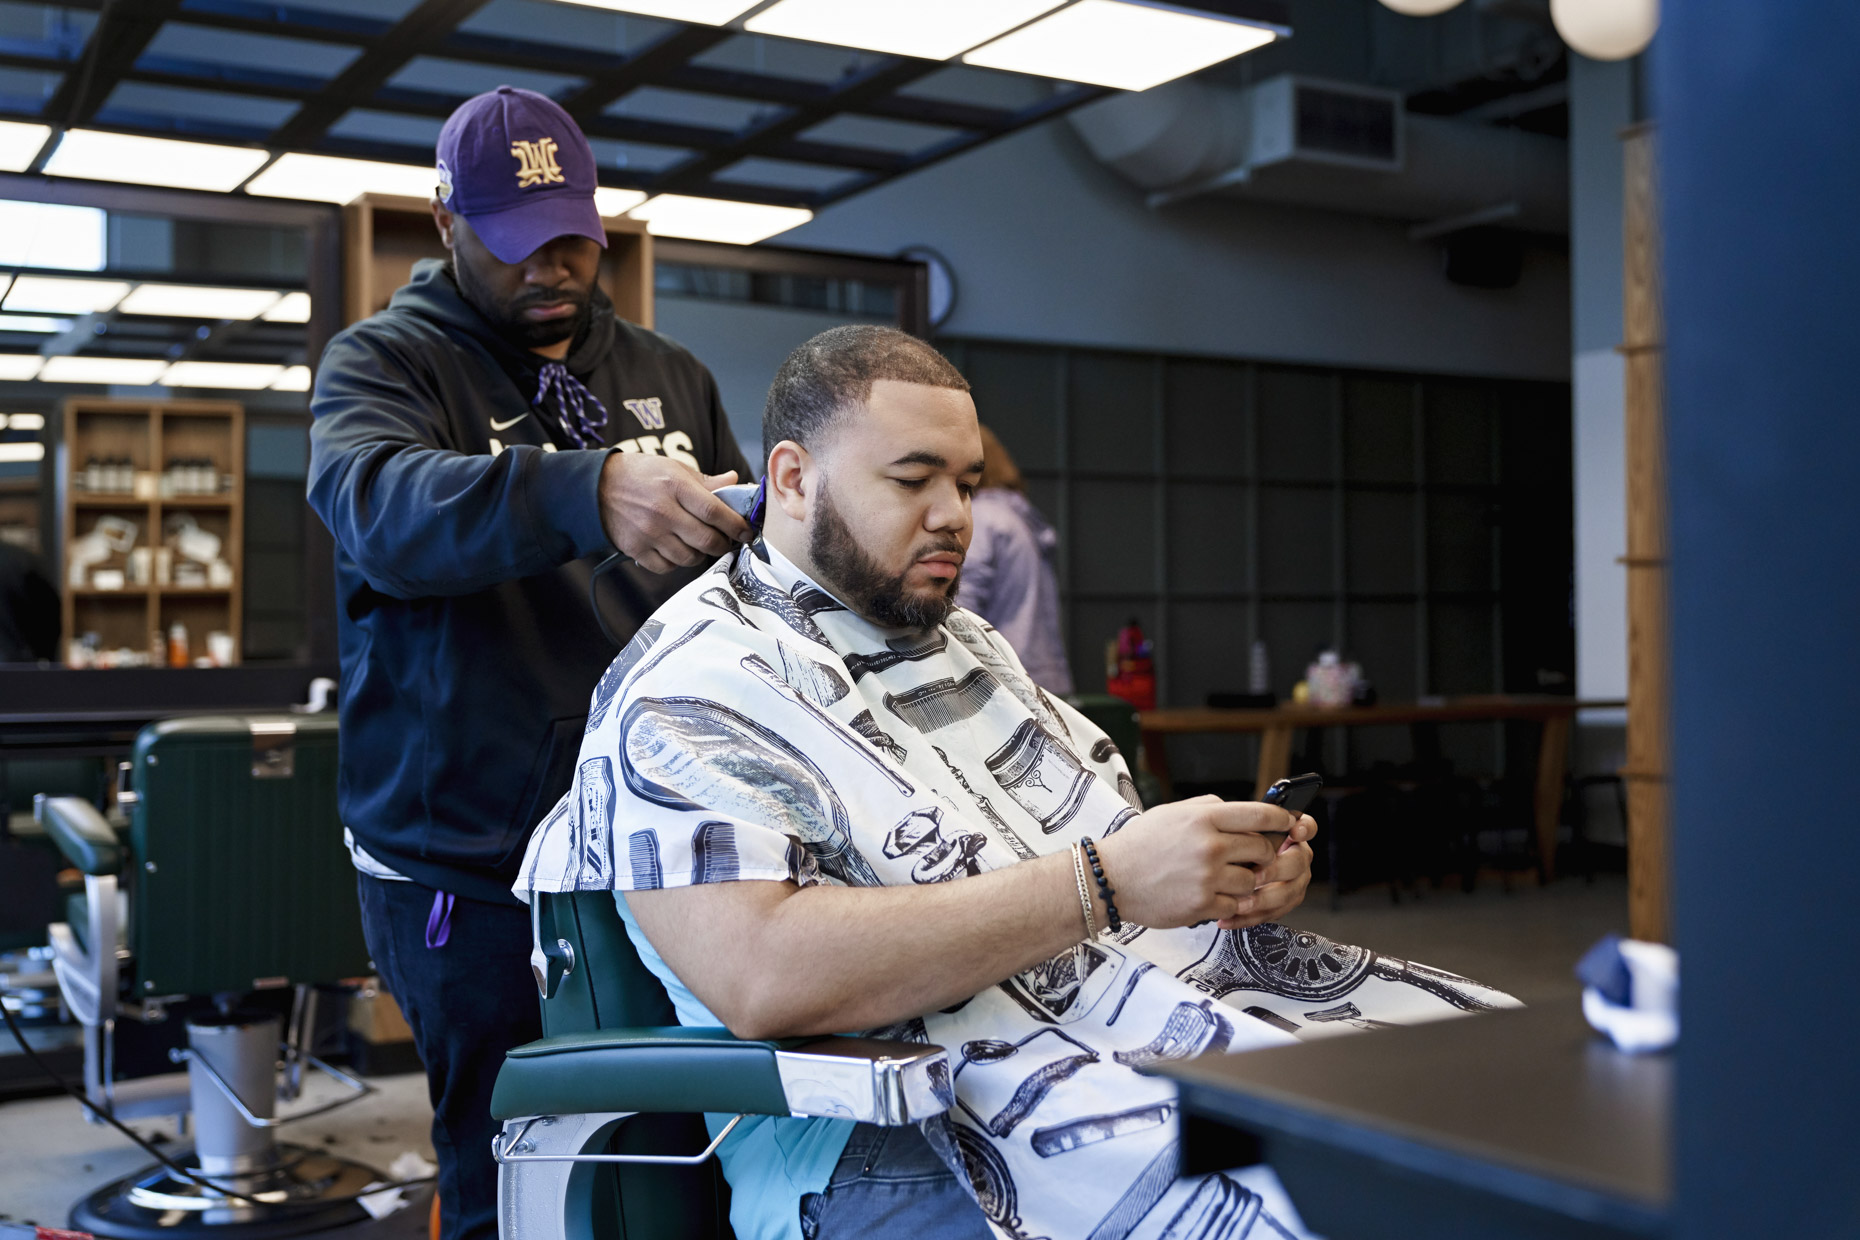 Man looking at phone while getting hair cut at barber shop